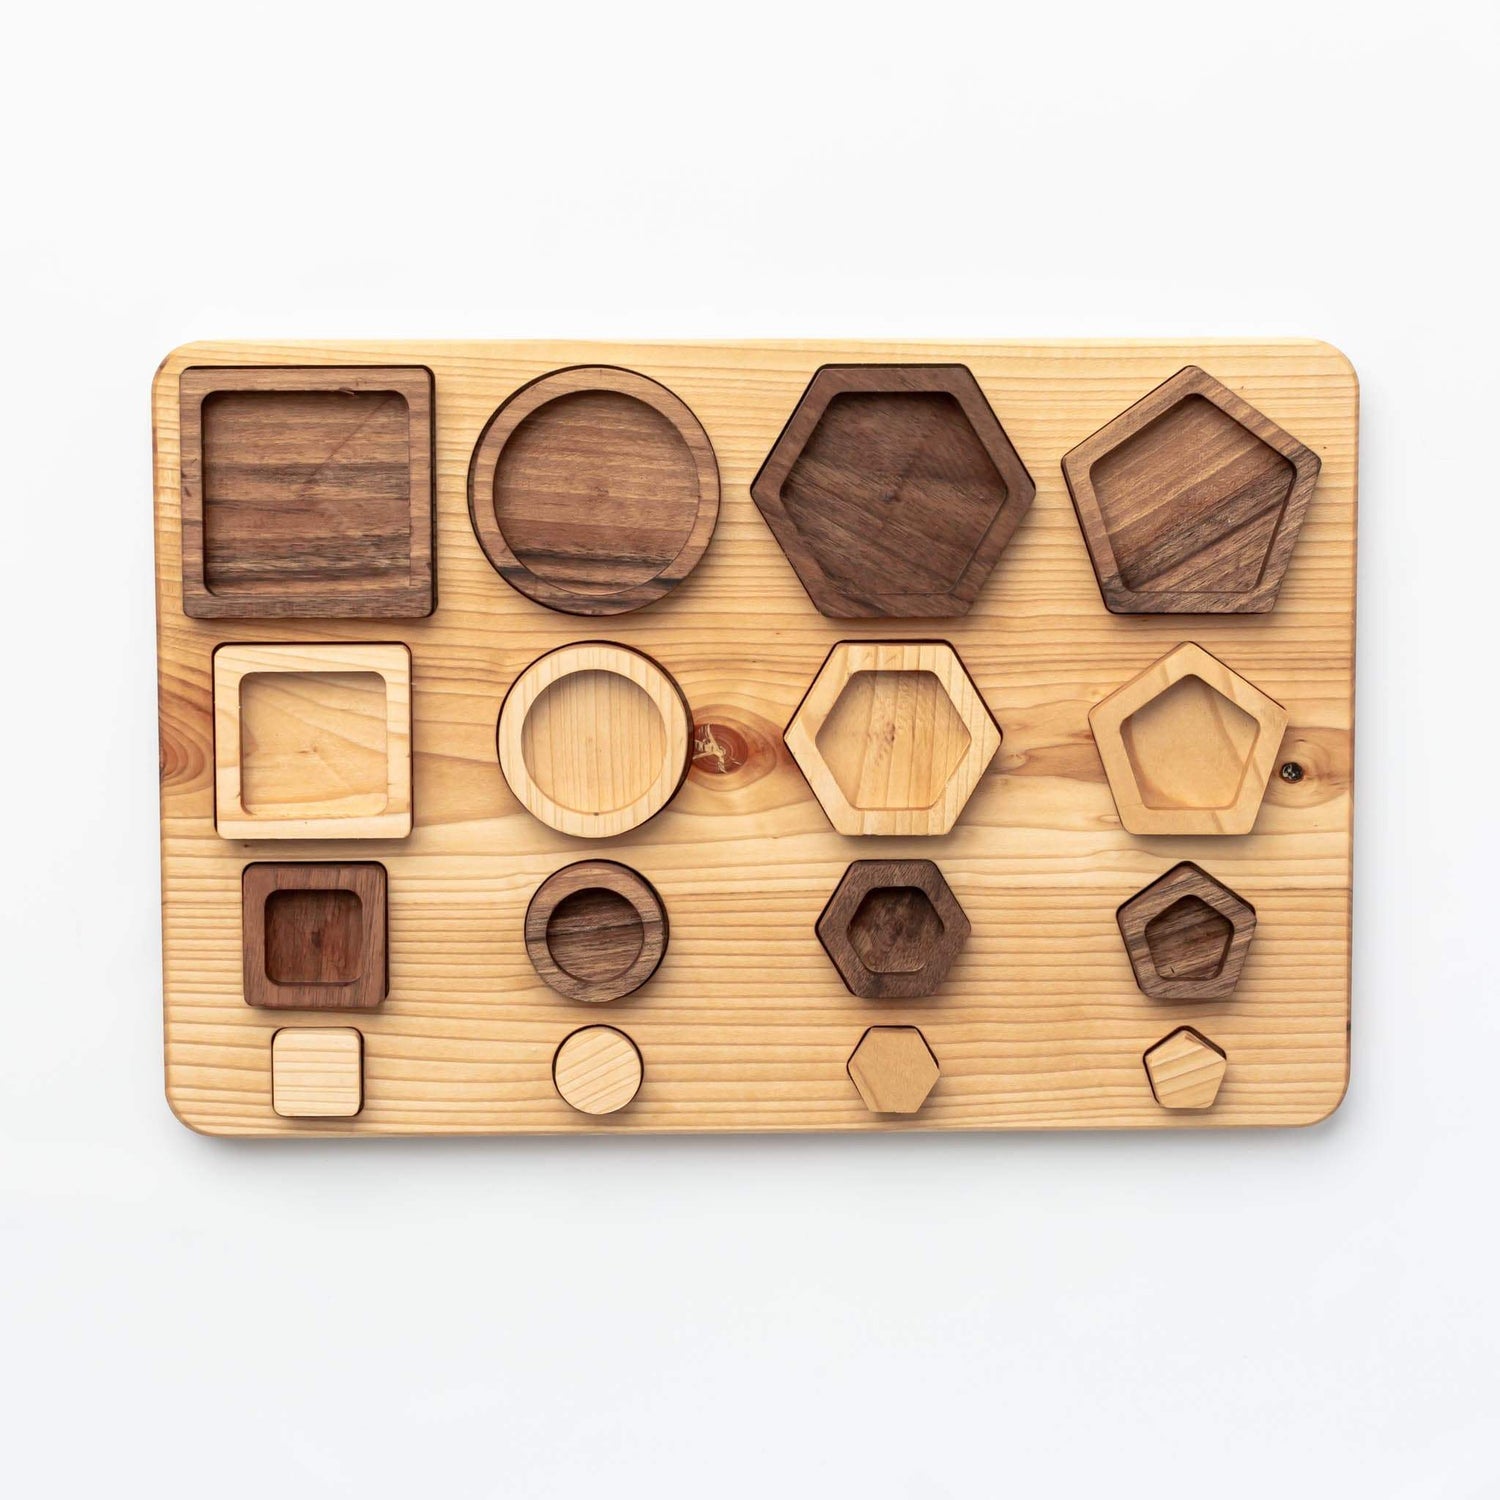 Oyuncak House Puzzle Handmade Wooden Shapes Puzzle